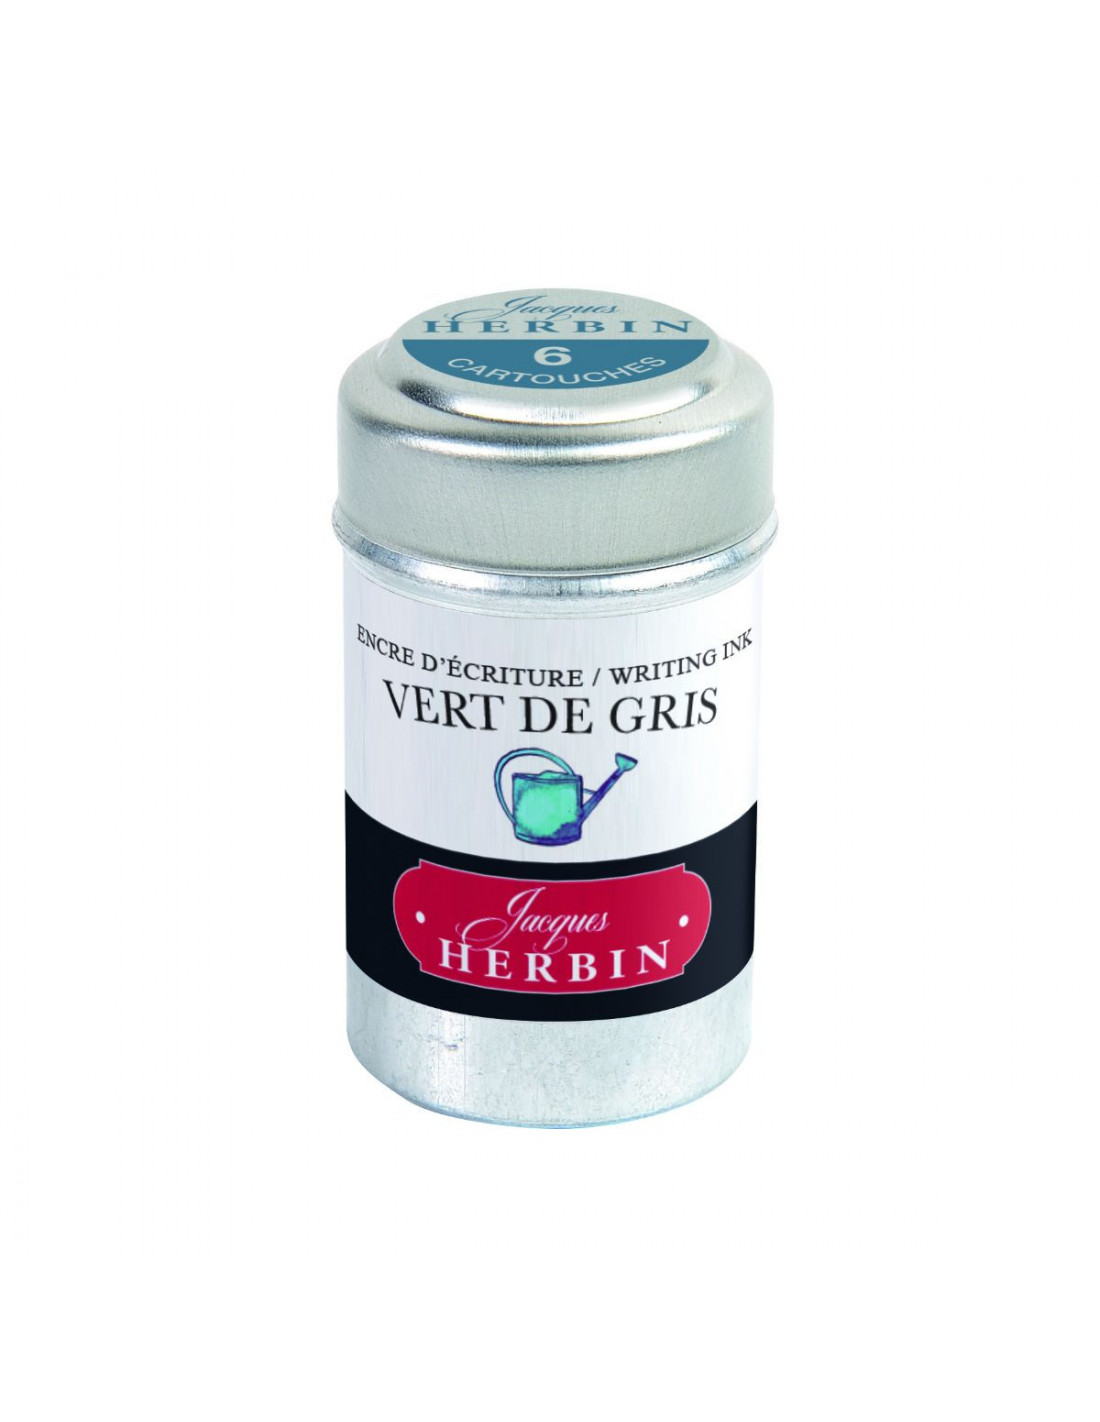 Jacques Herbin Ink - Vert de Gris - Verdigris - Box of 6 cartridges